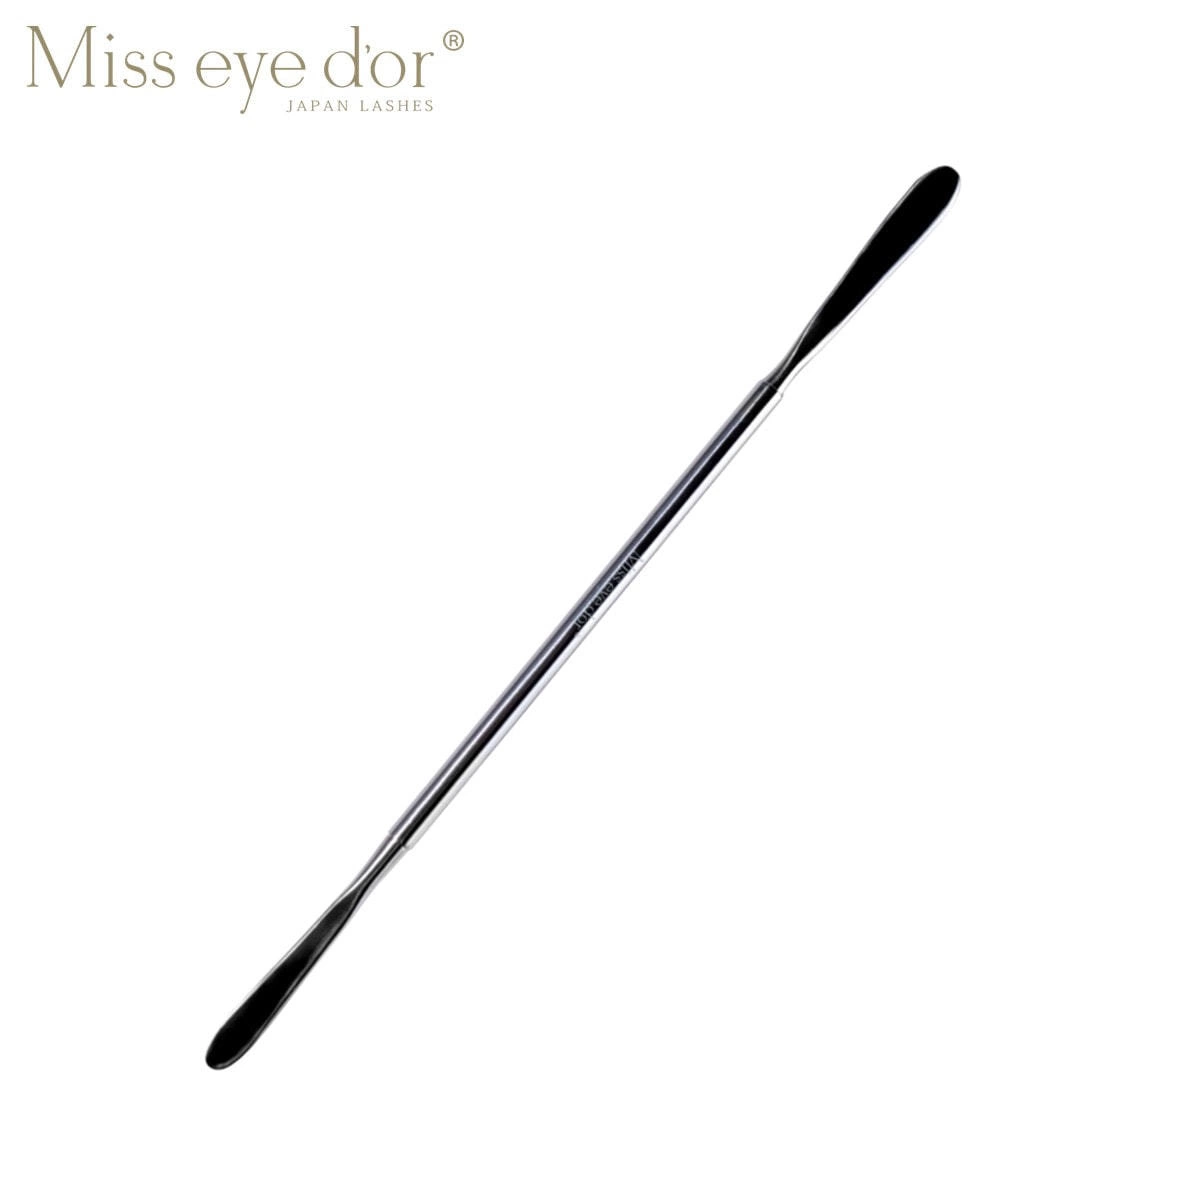 【Miss eye d’or】スパチュラ